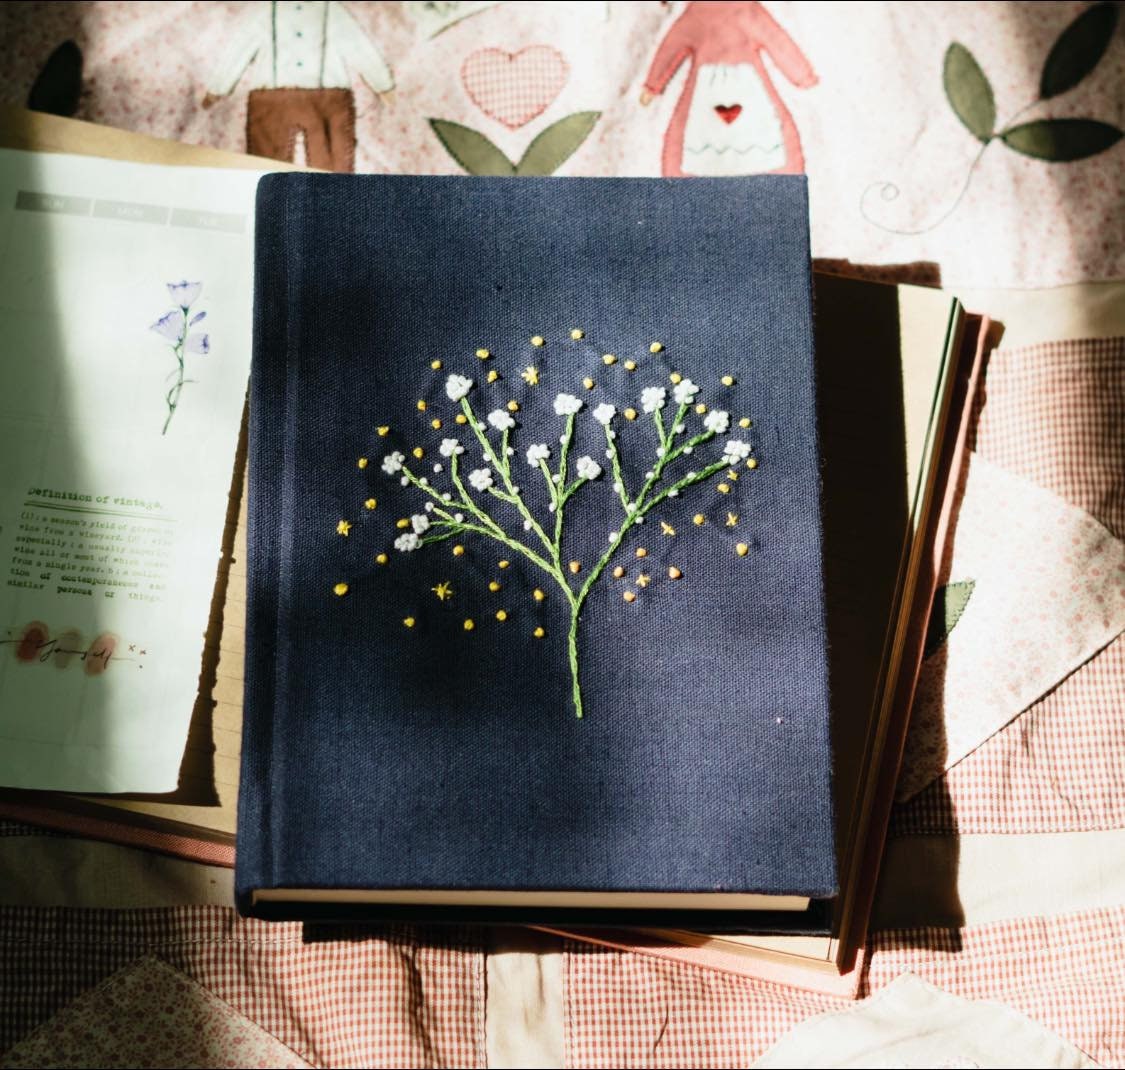 Flower sketchbook cover  Sketchbook cover, Book cover art, Diary cover  design